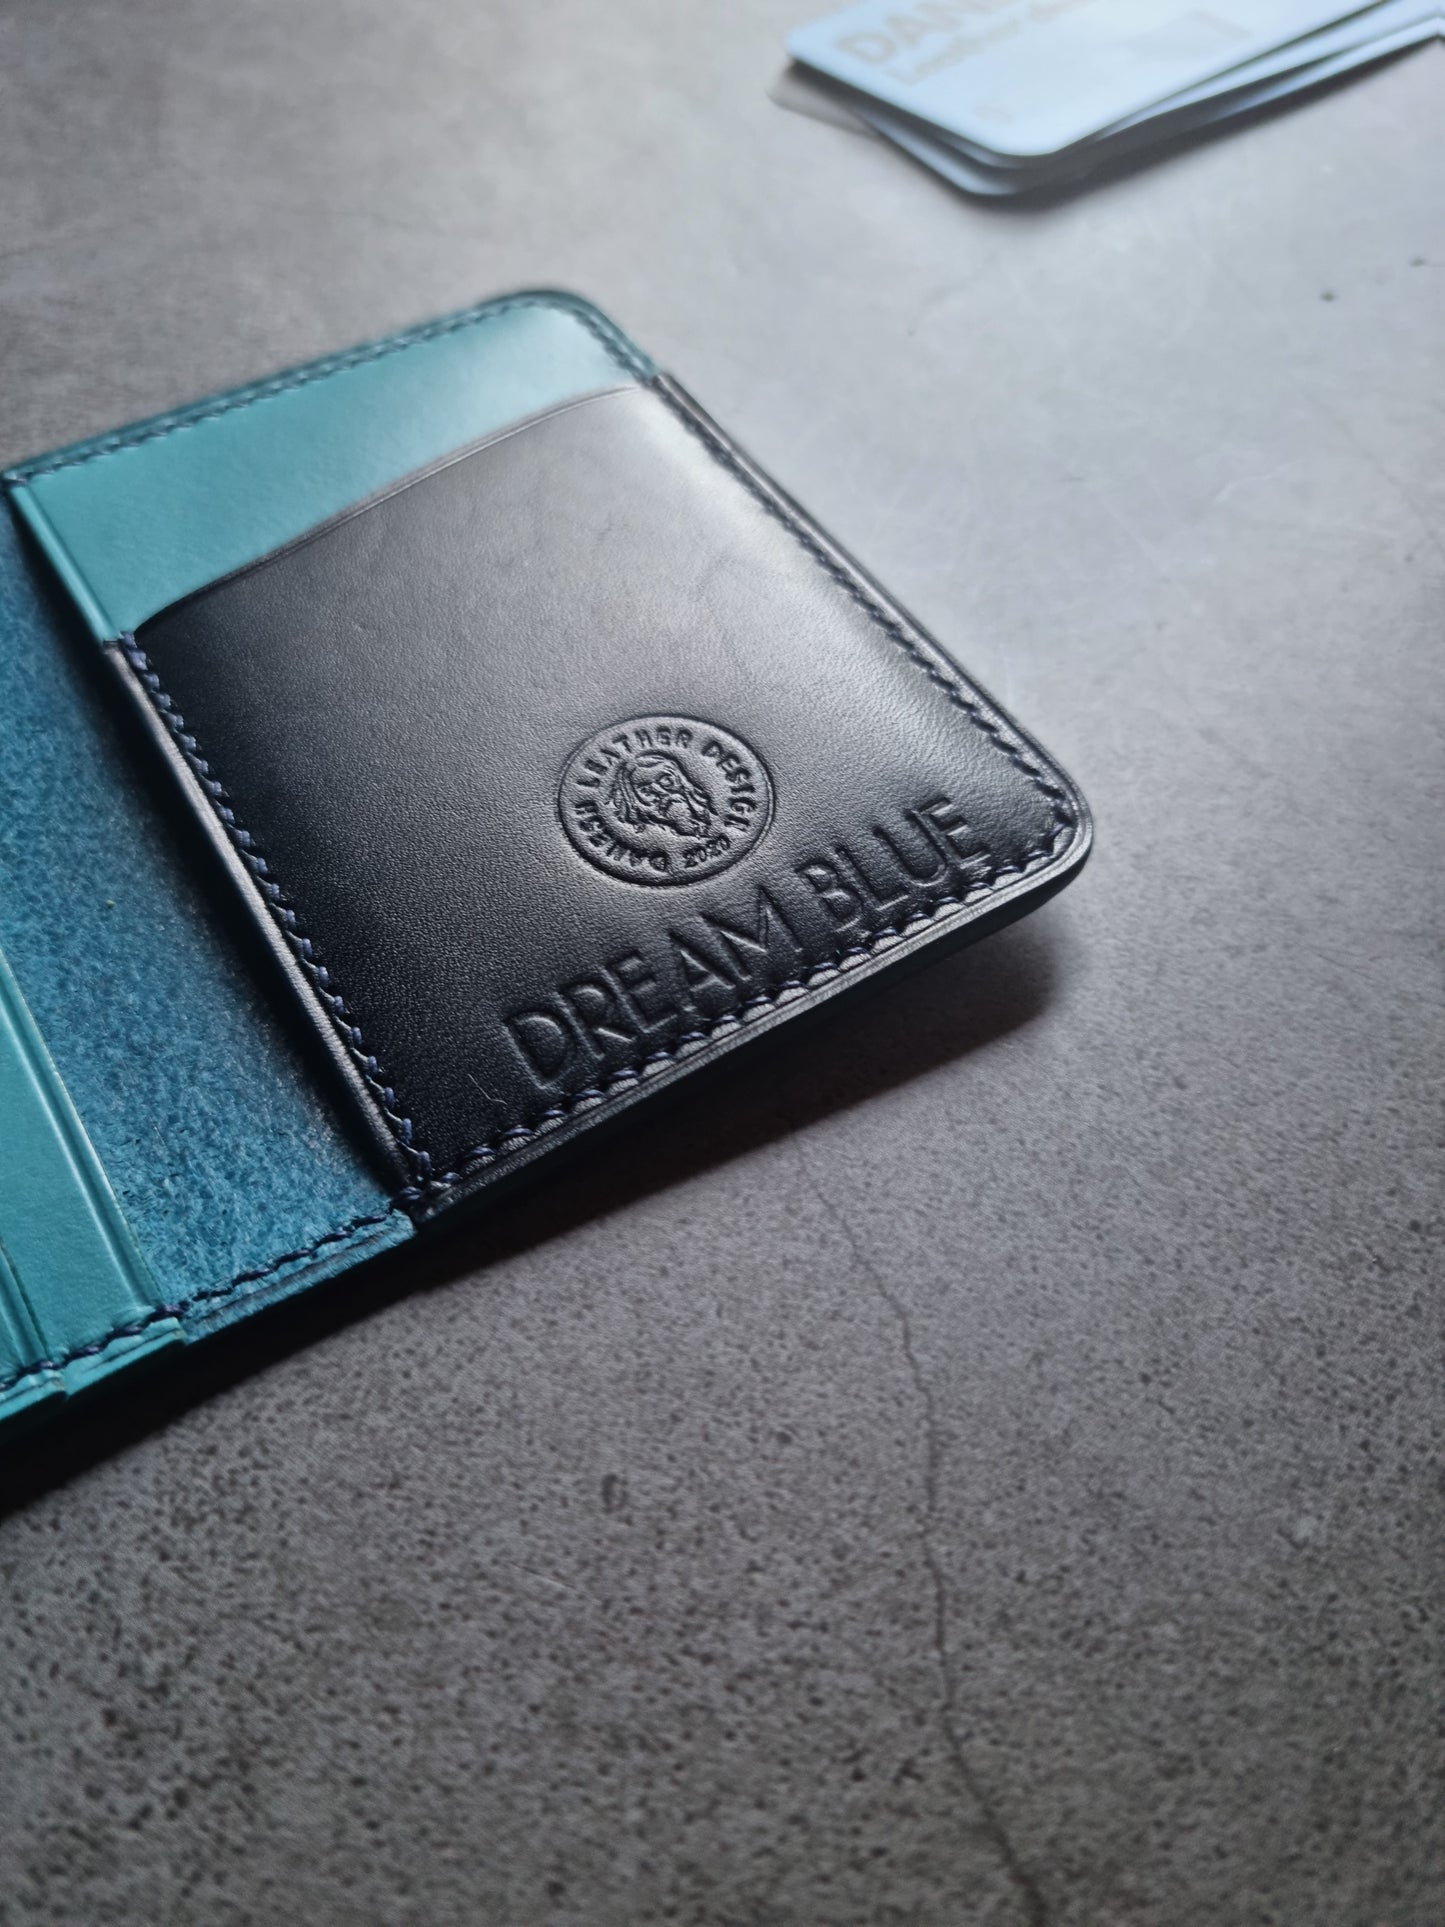 Denis the menace - Mini wallet - Leather Template | DIY | Pdf